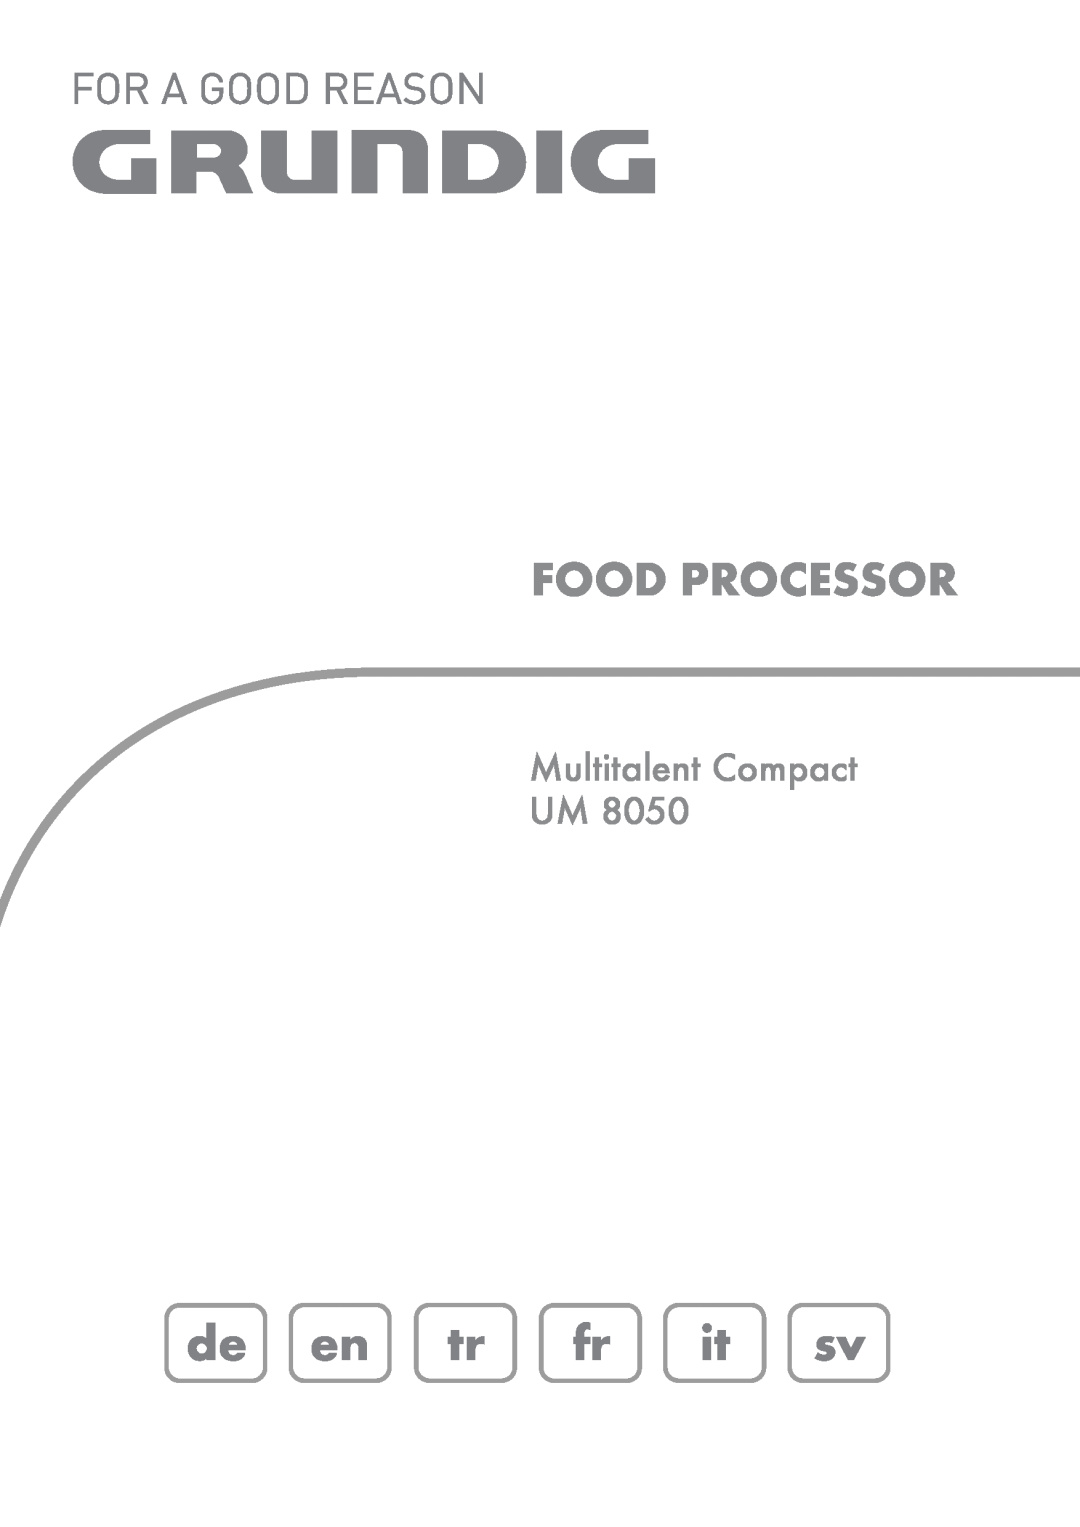 Grundig UM 8050 manual de en tr fr it sv, Food Processor, Multitalent Compact UM 